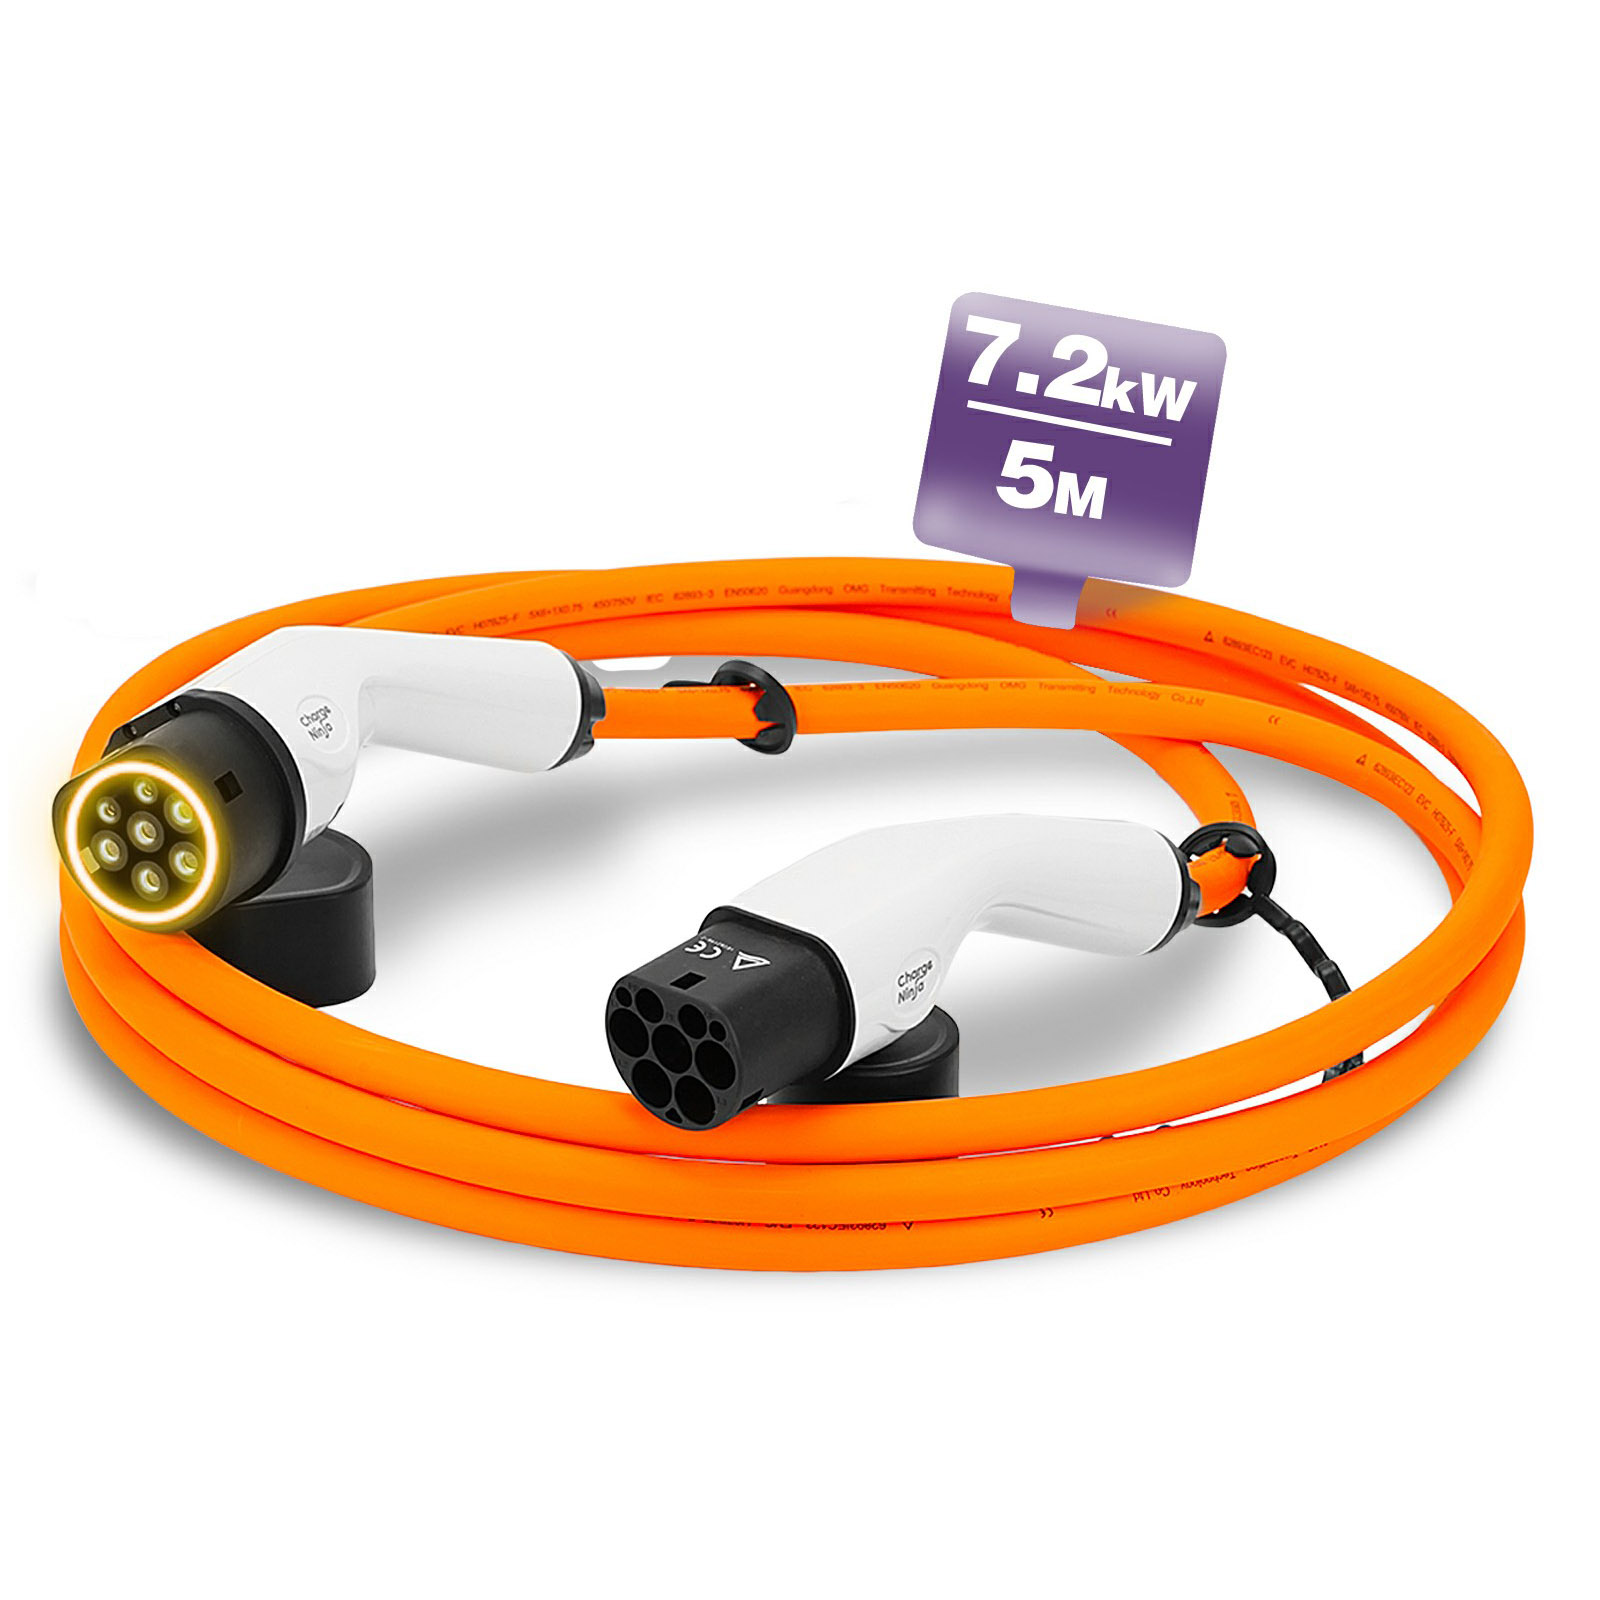 Charge Ninja EV Charging Cable 7.2kw 5m orange